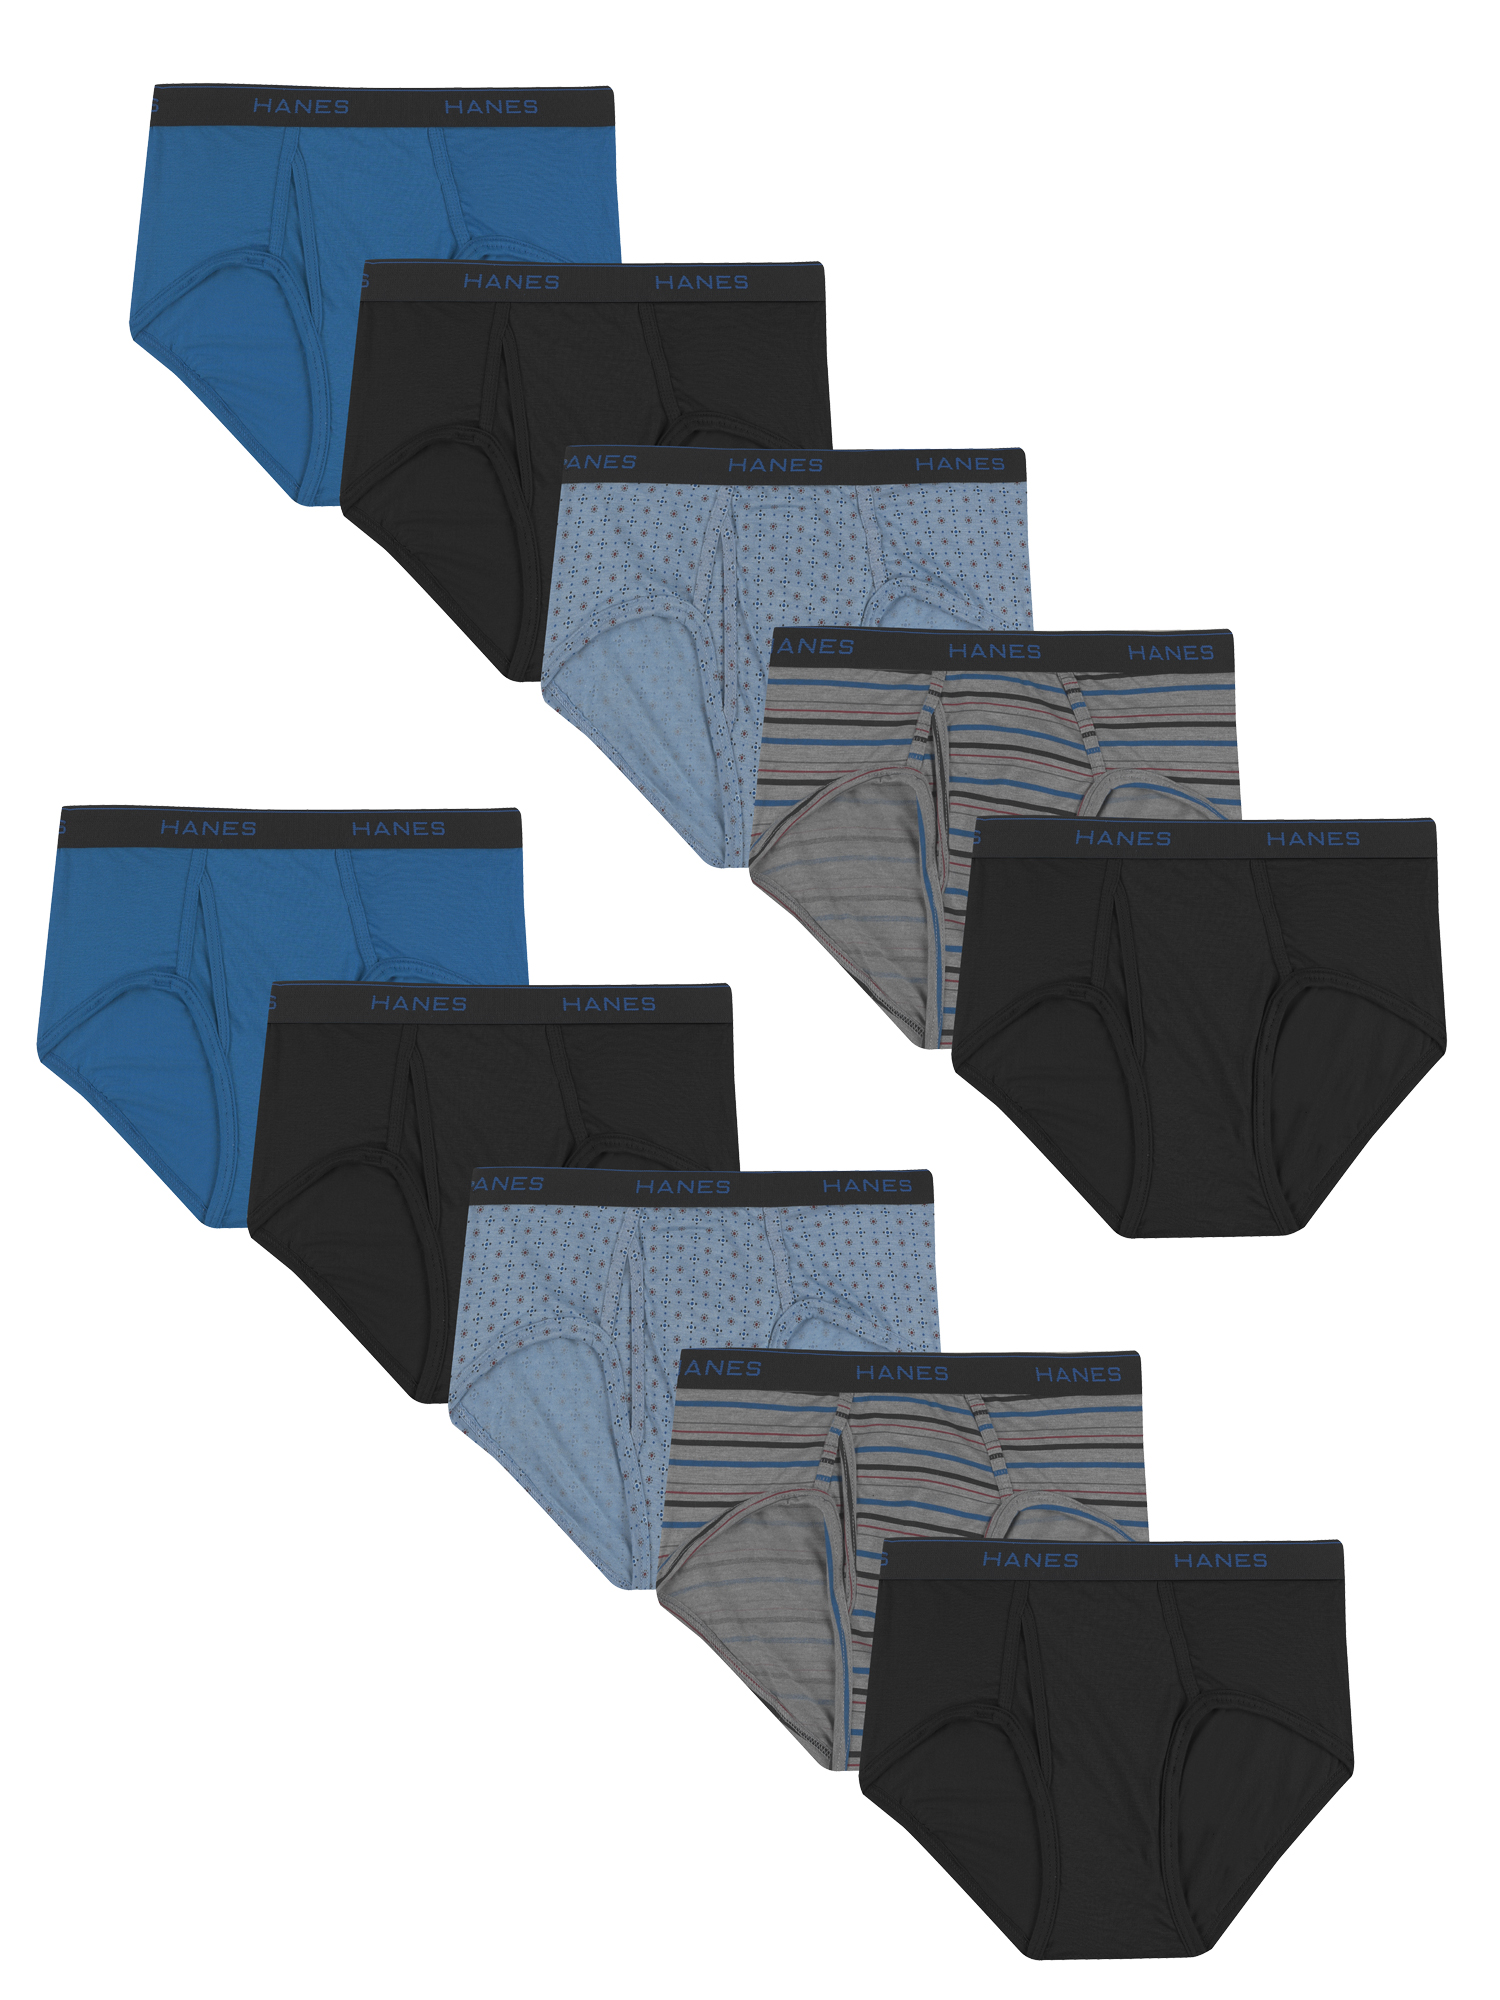 Hanes Men's Tagless ComfortBlend Assorted Briefs, 10-Pack Bundle, Size S-3XL - image 2 of 6